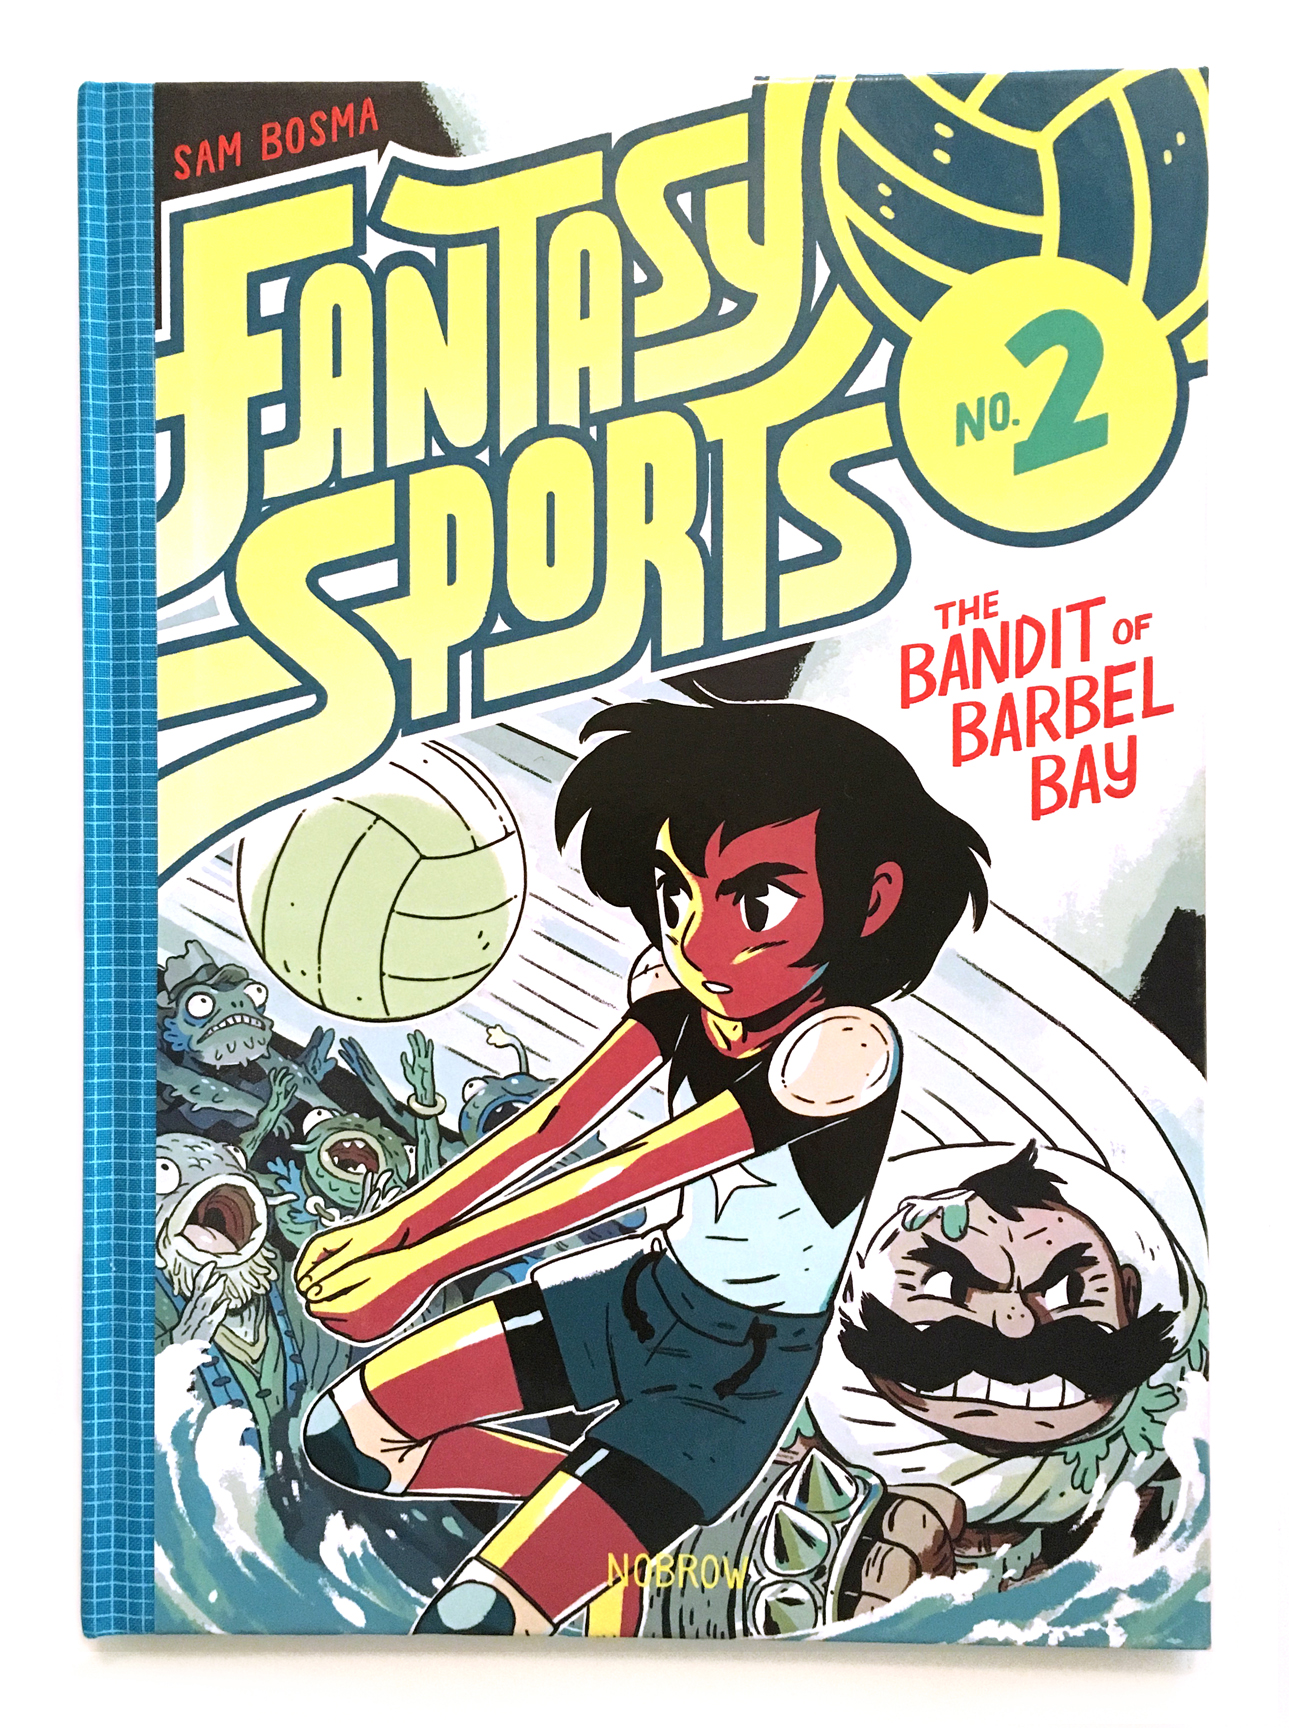 Fantasy Sports #2: The Bandit of Barbel Bay